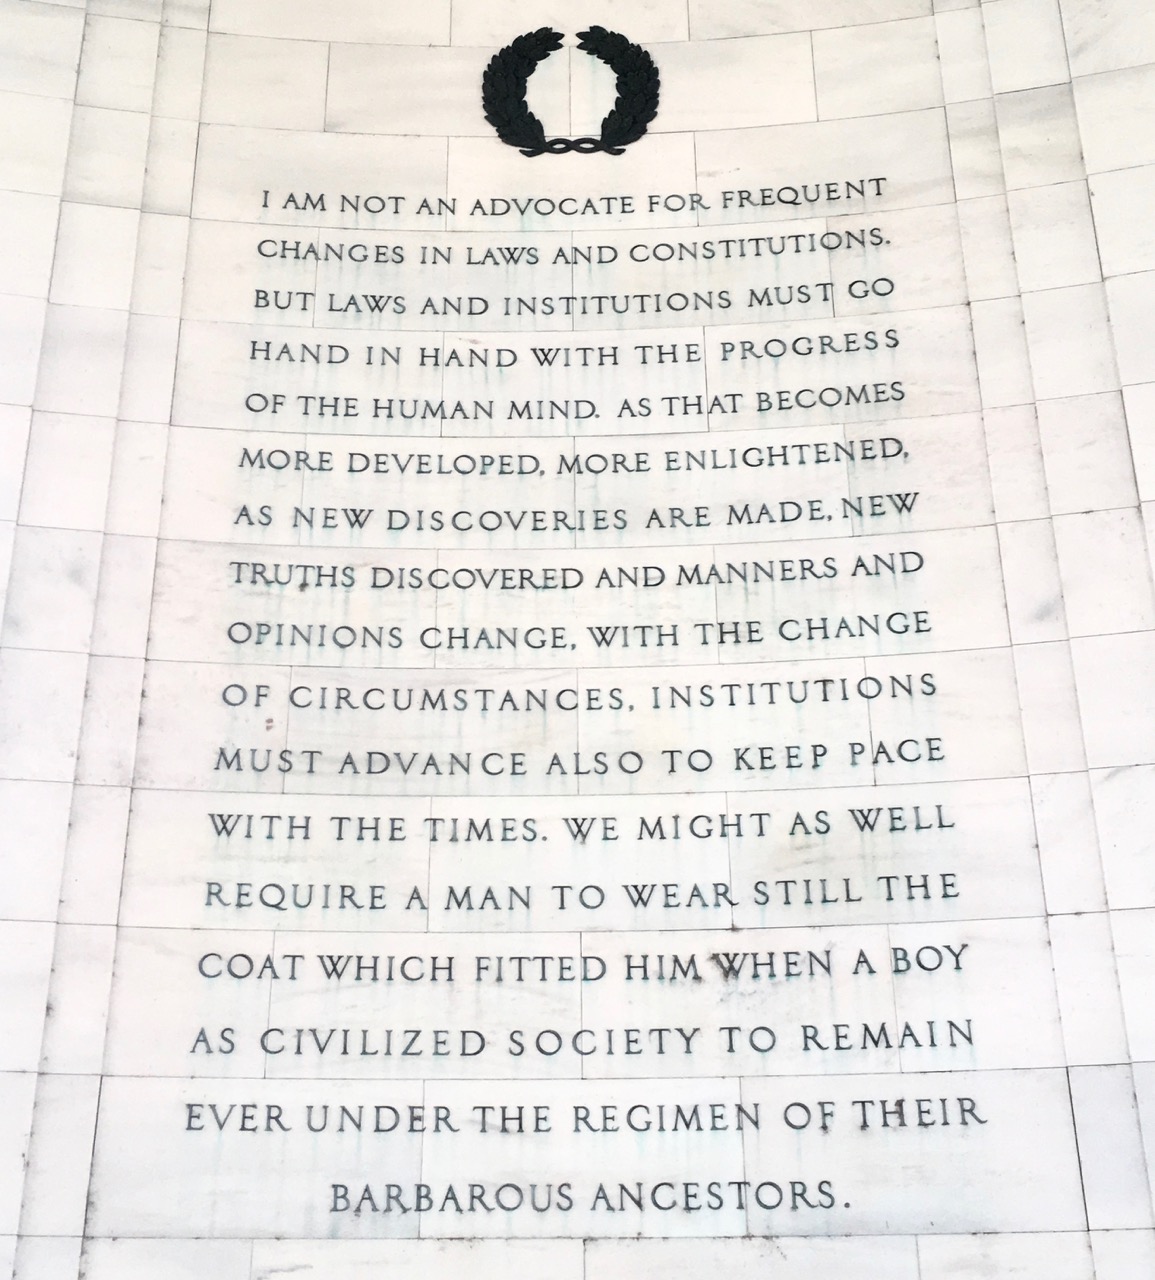 Jefferson quote